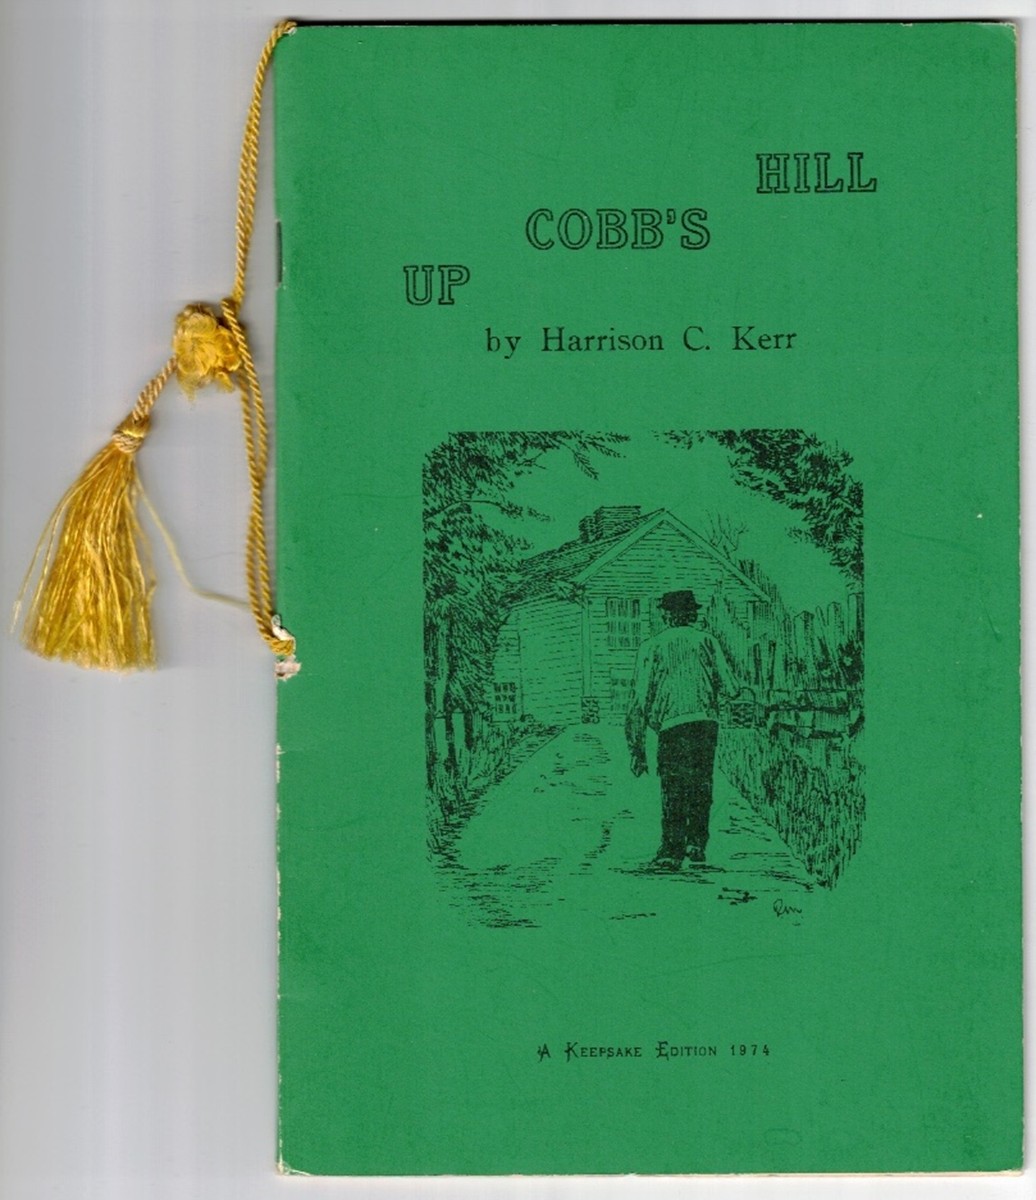 KERR, HARRISON C. - Up Cobb's Hill a Keepsake Edition 1974